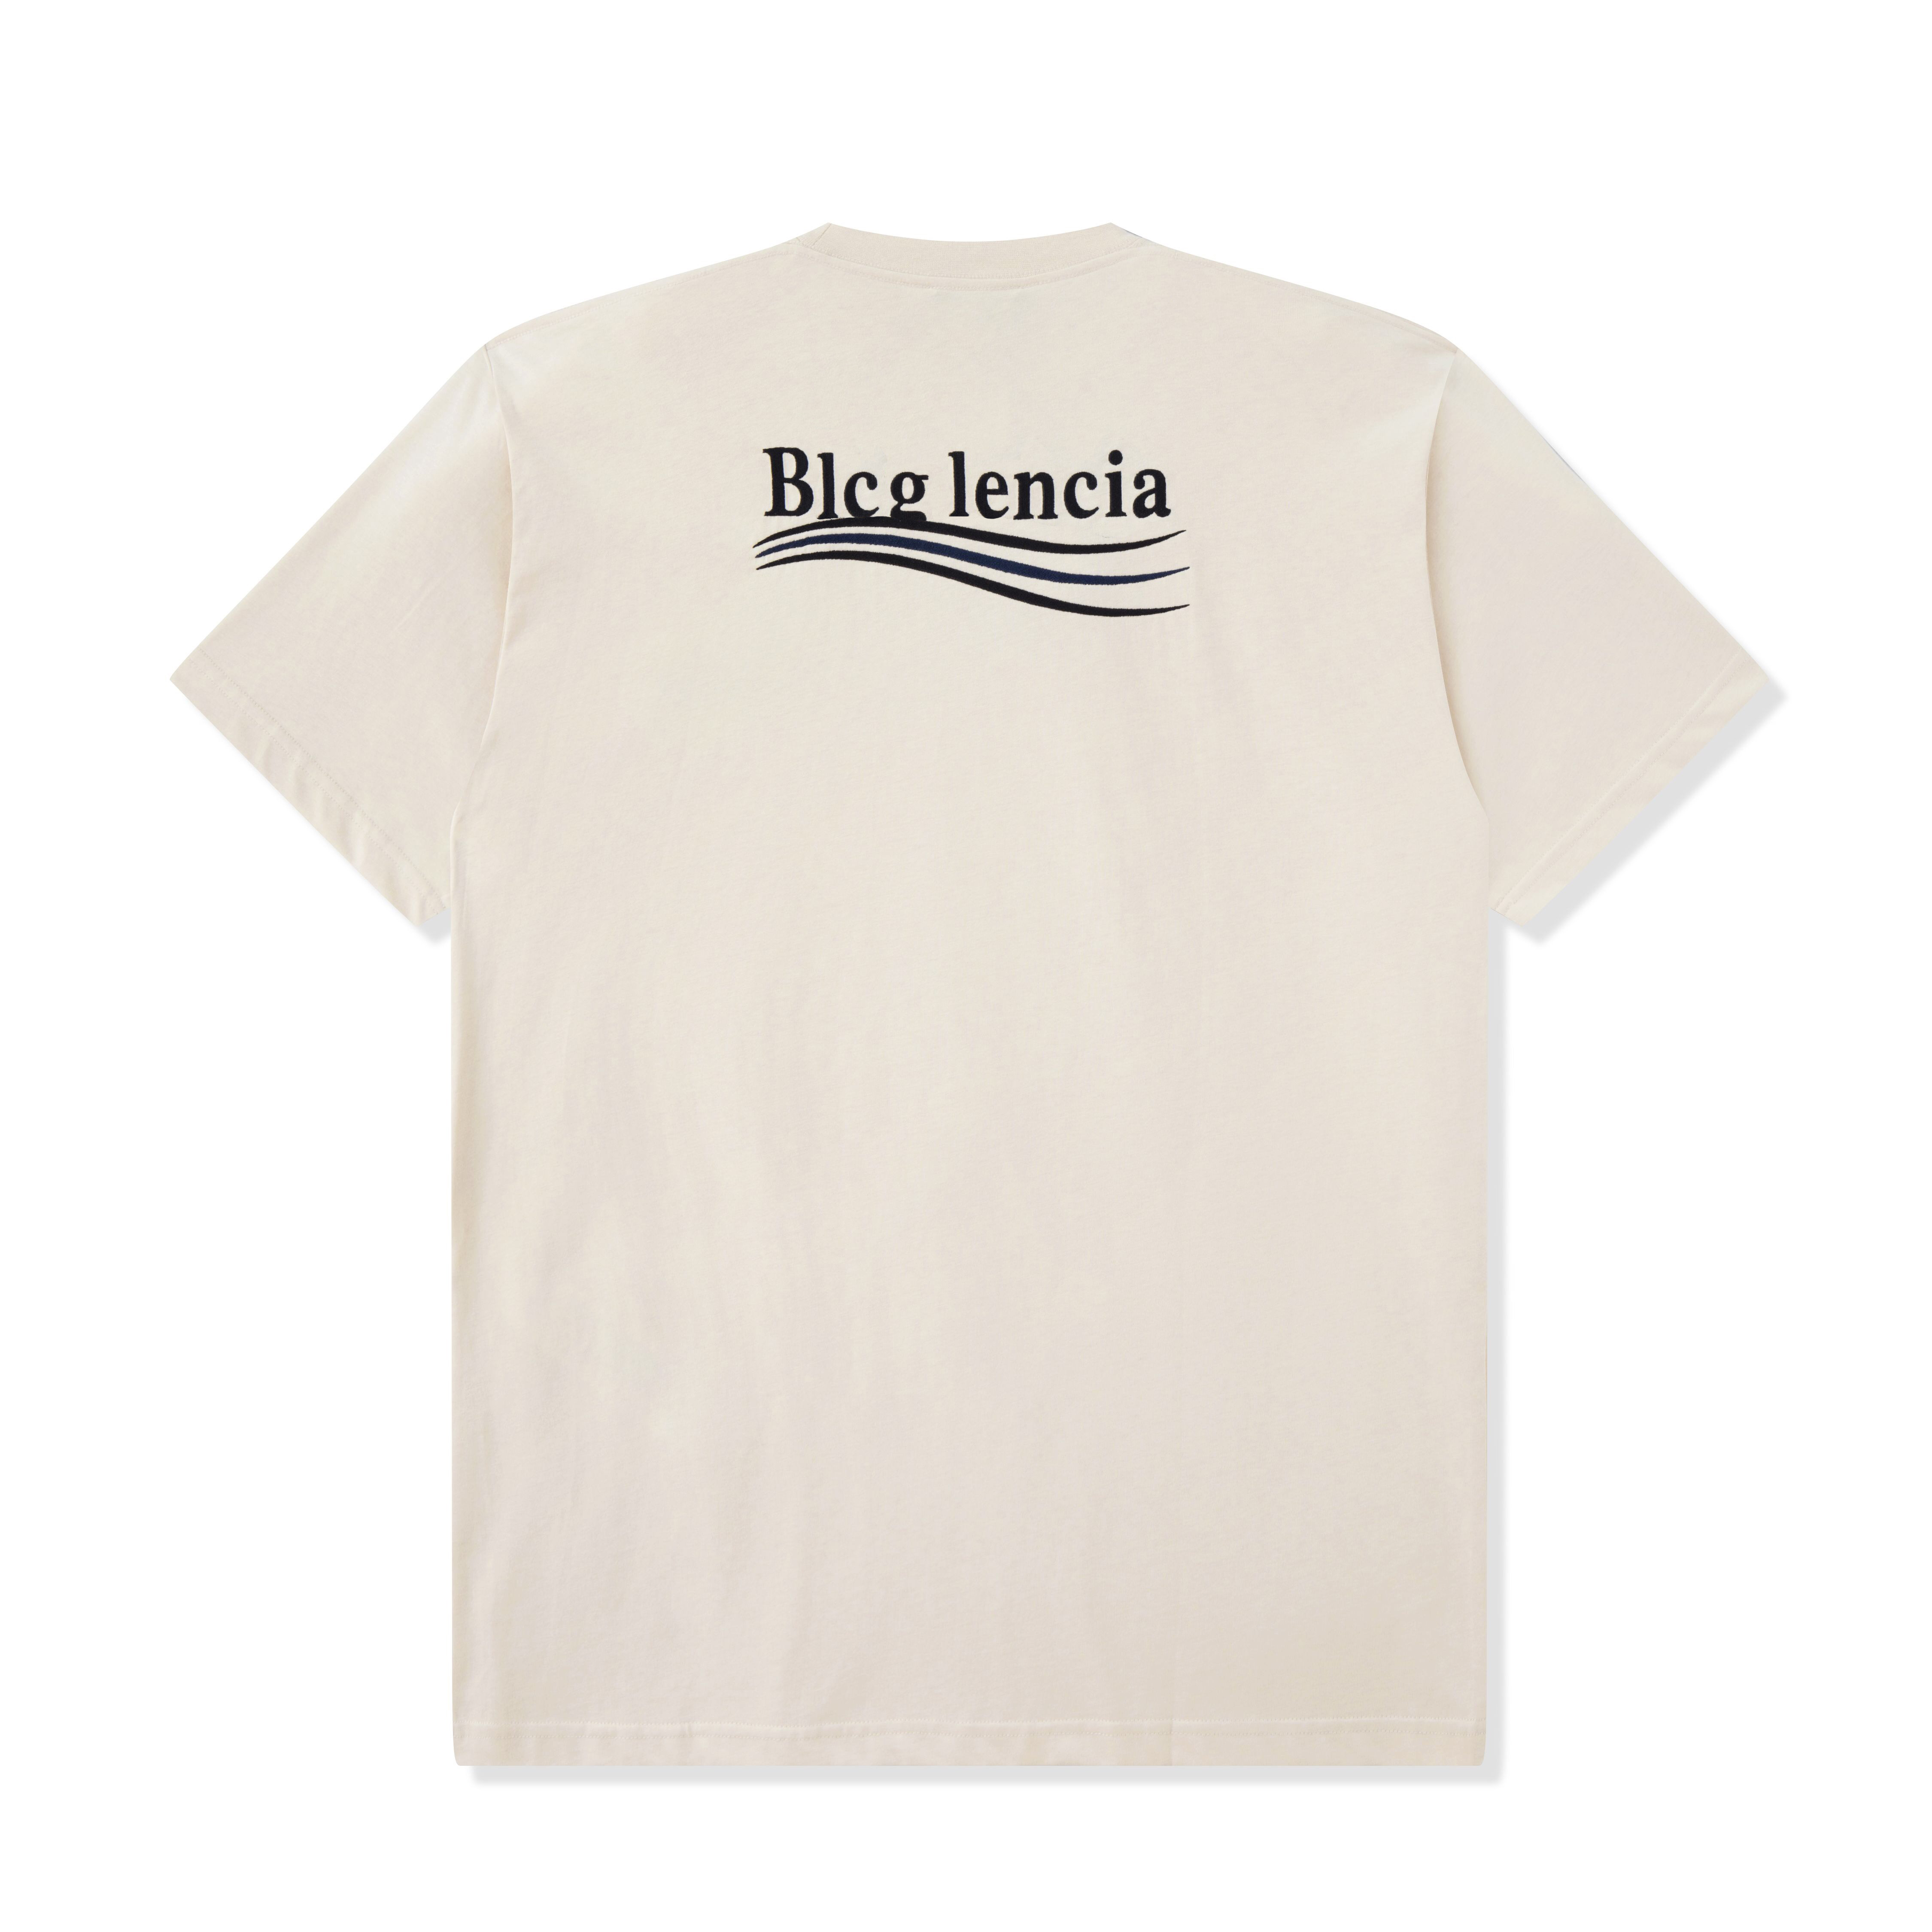 BLCG LENCIA Unisex Summer T-shirts Womens Oversize Heavyweight 100% Cotton Fabric Triple Stitch Workmanship Plus Size Tops Tees SM130166